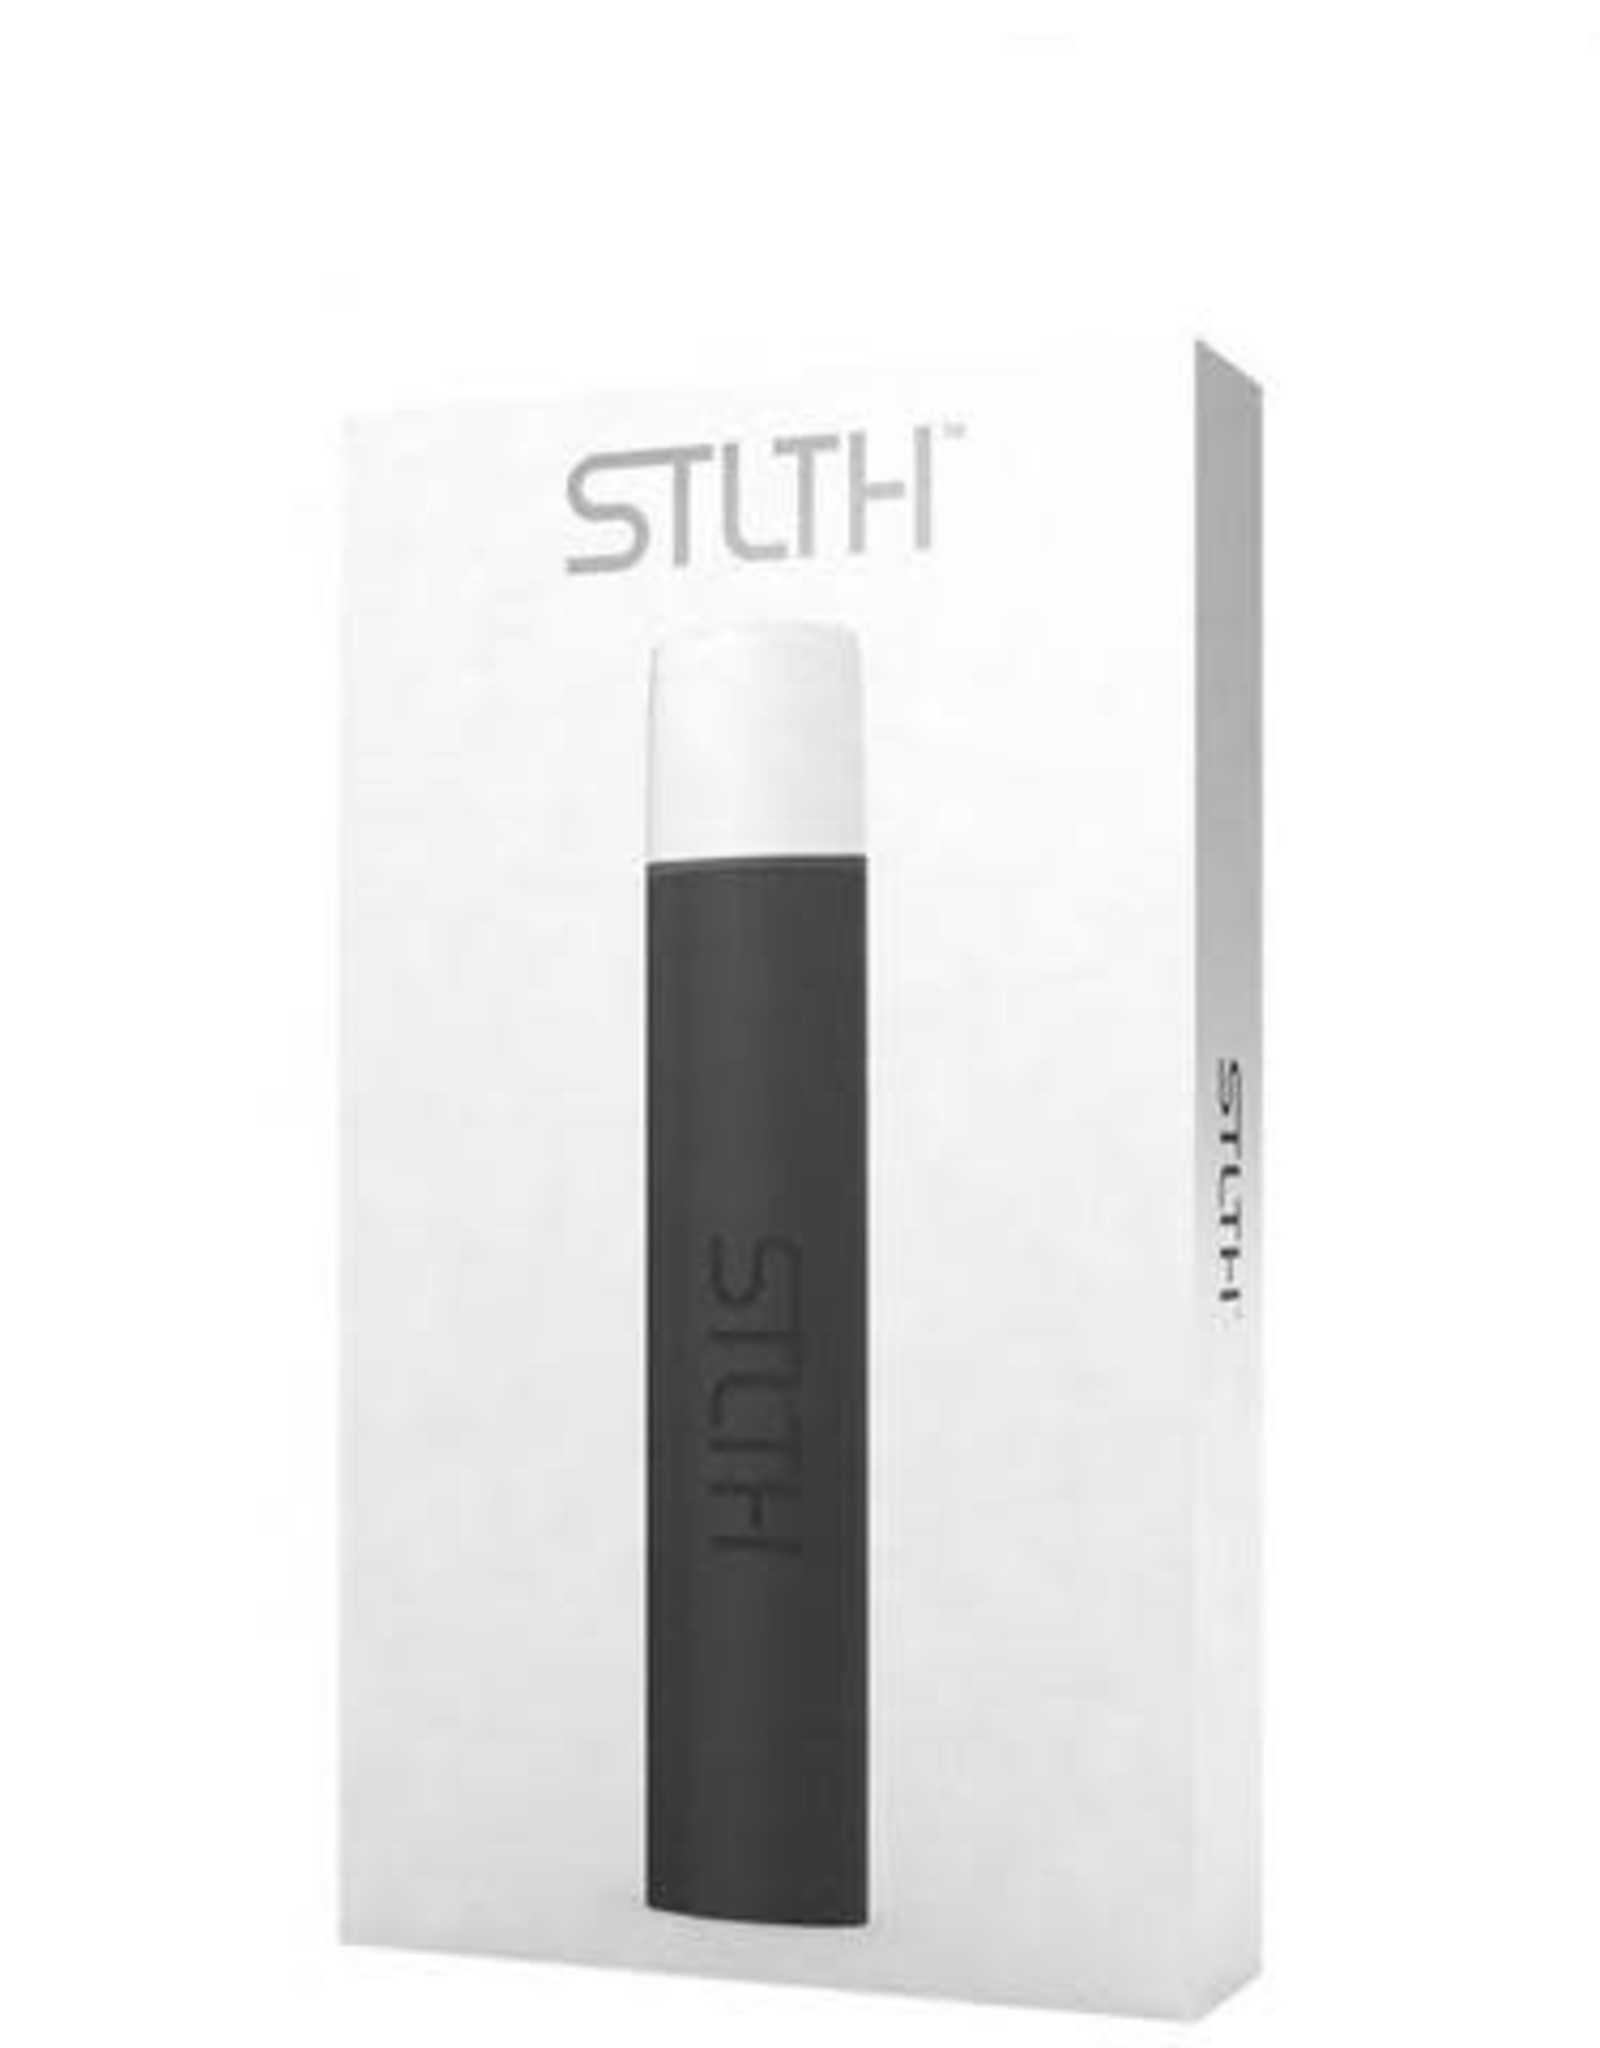 STLTH STLTH 420 mAh Device